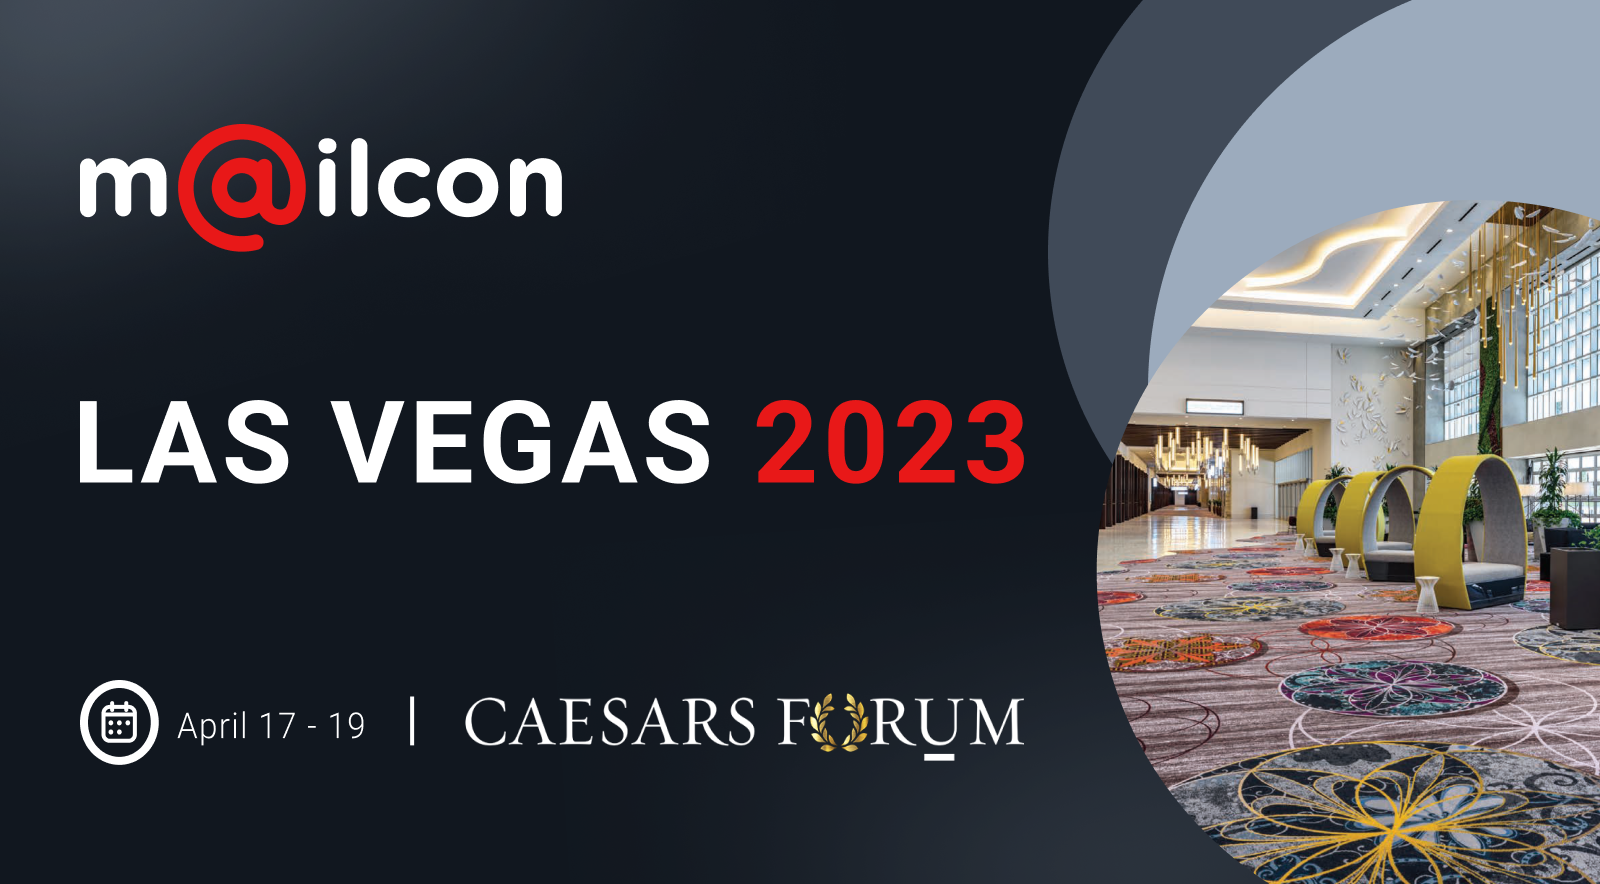 MailCon Las Vegas 2023, Clark, Nevada, United States